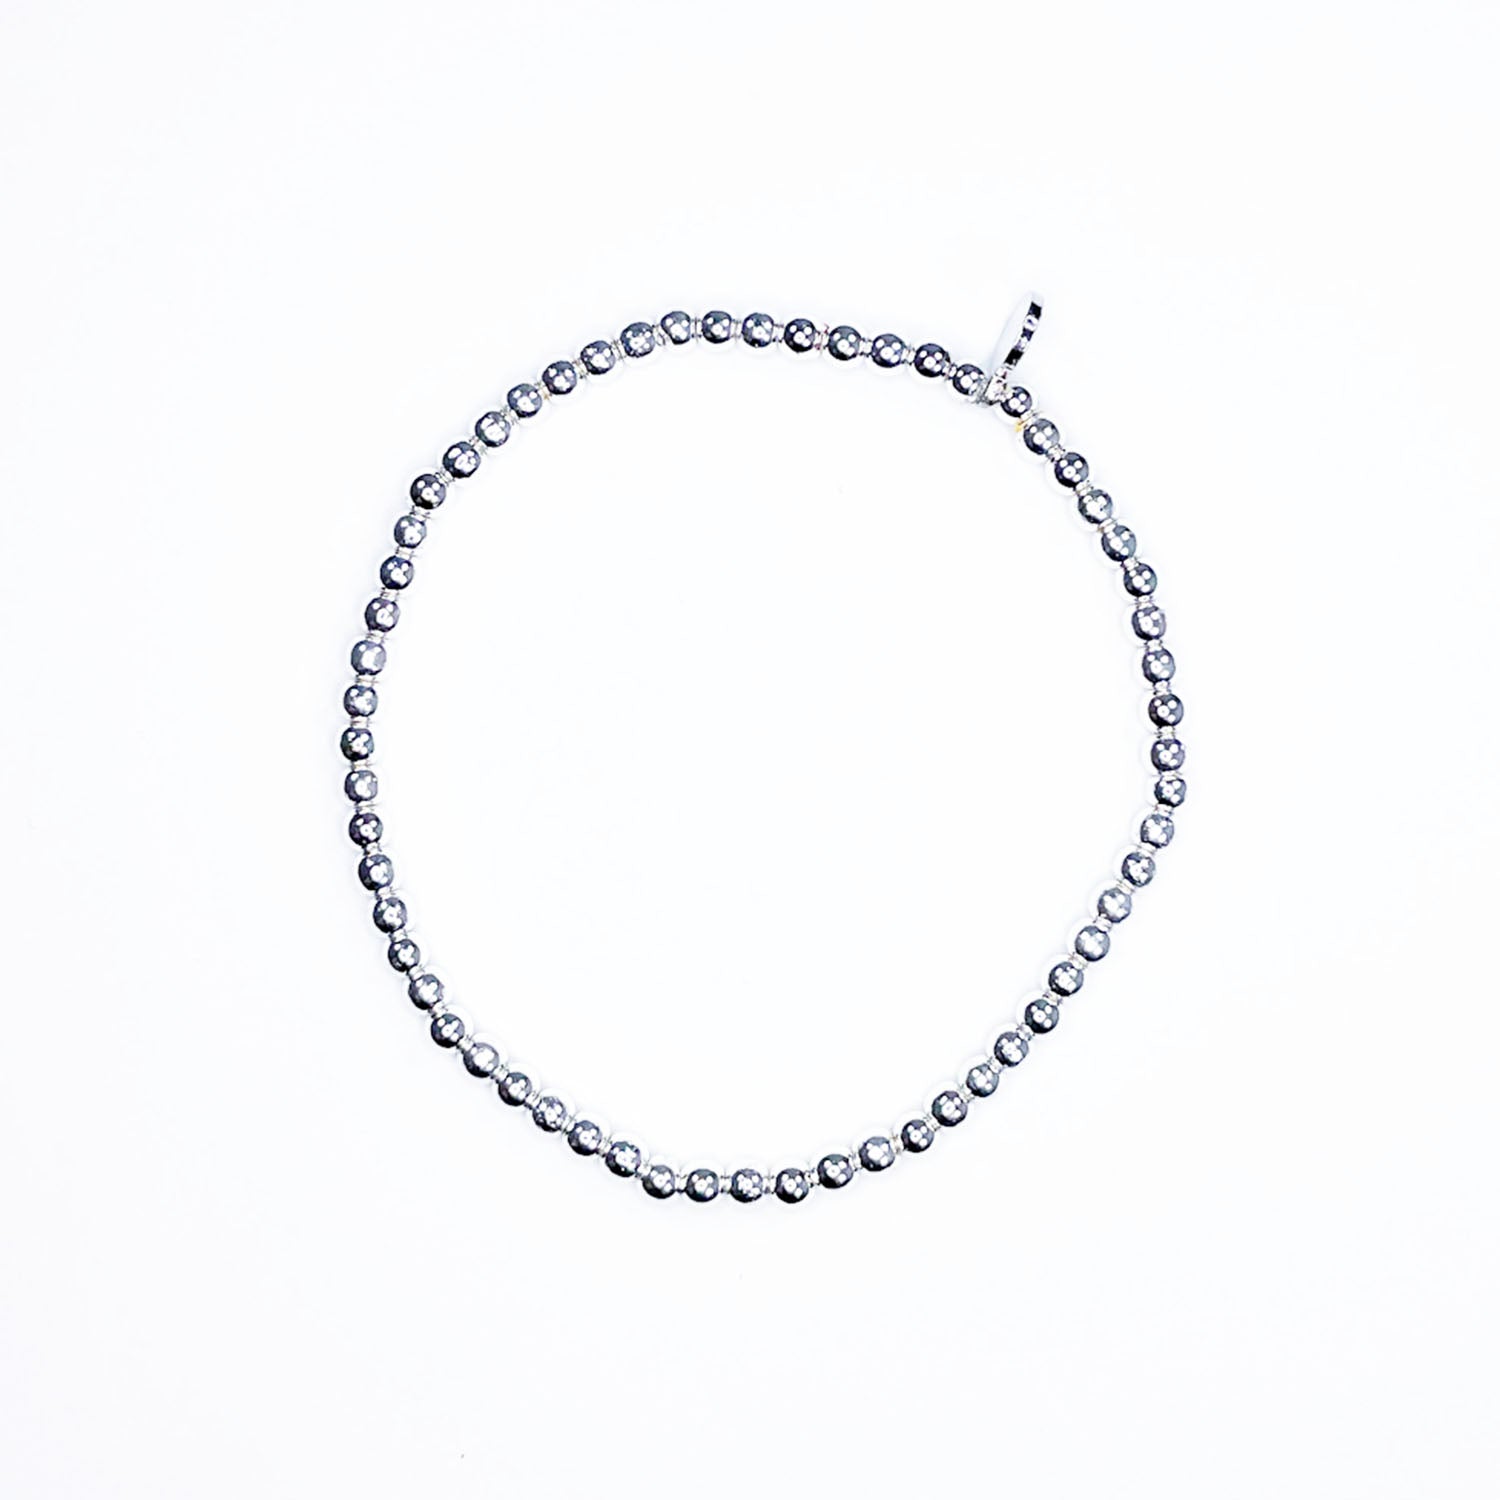 Silver Hematite Bead Bracelet